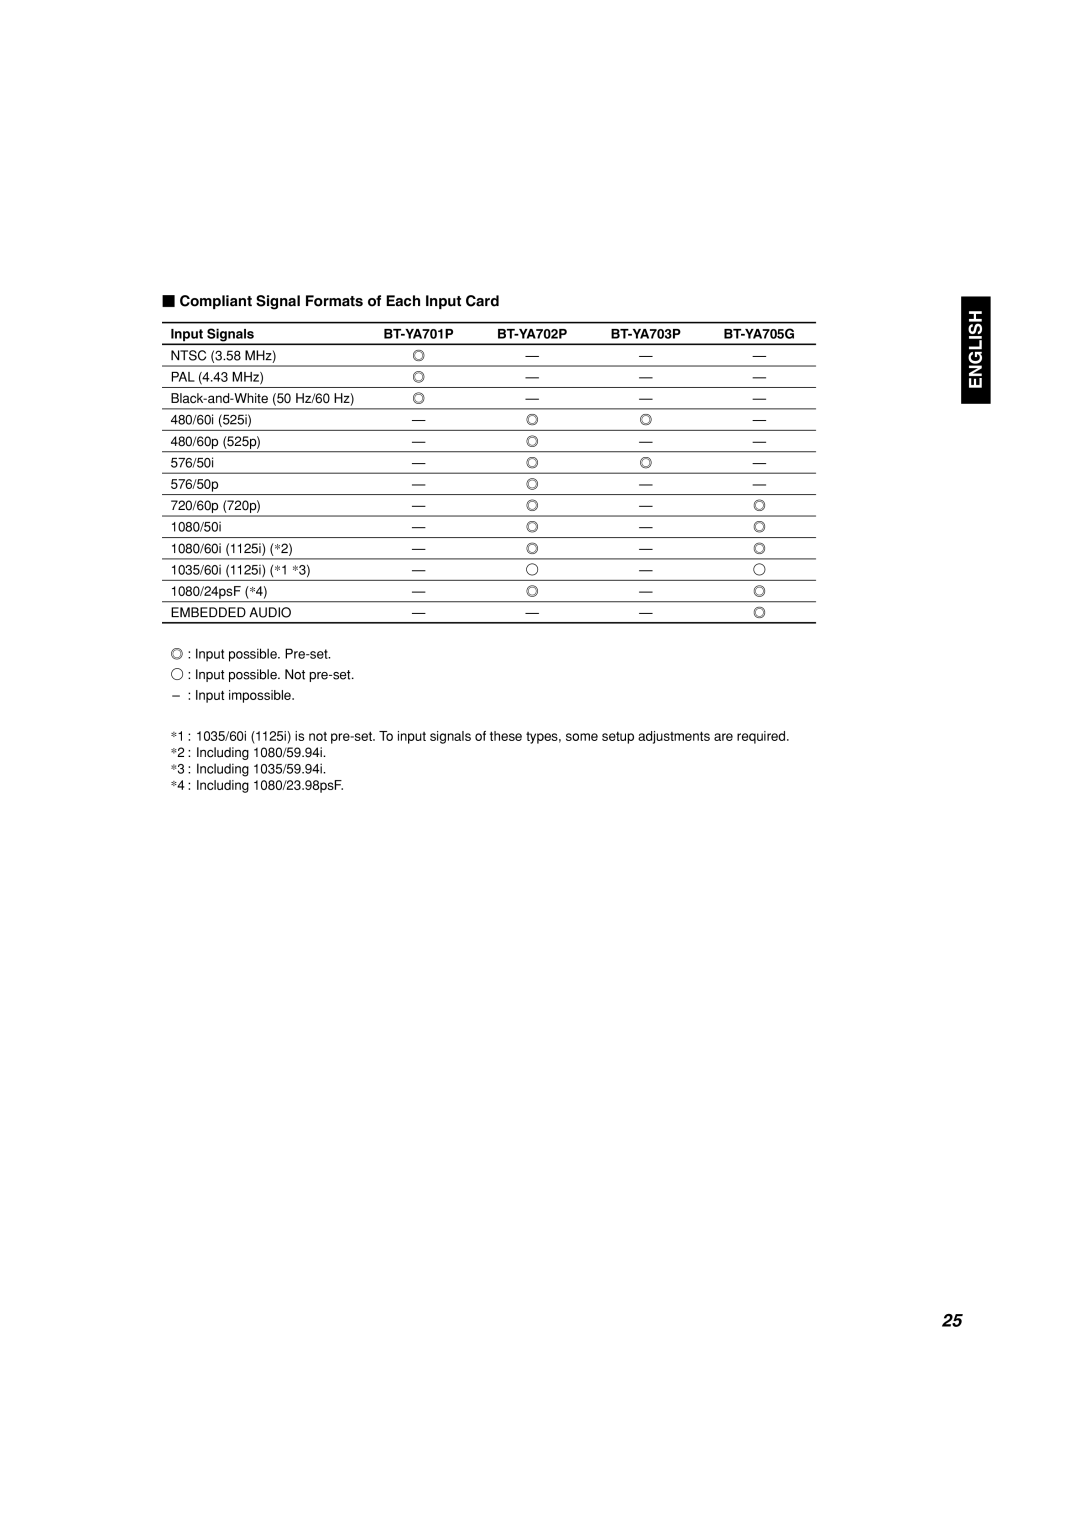 Panasonic BT-H1700AE manual English,  Compliant Signal Formats of Each Input Card, Input Signals, BT-YA701P, BT-YA702P 